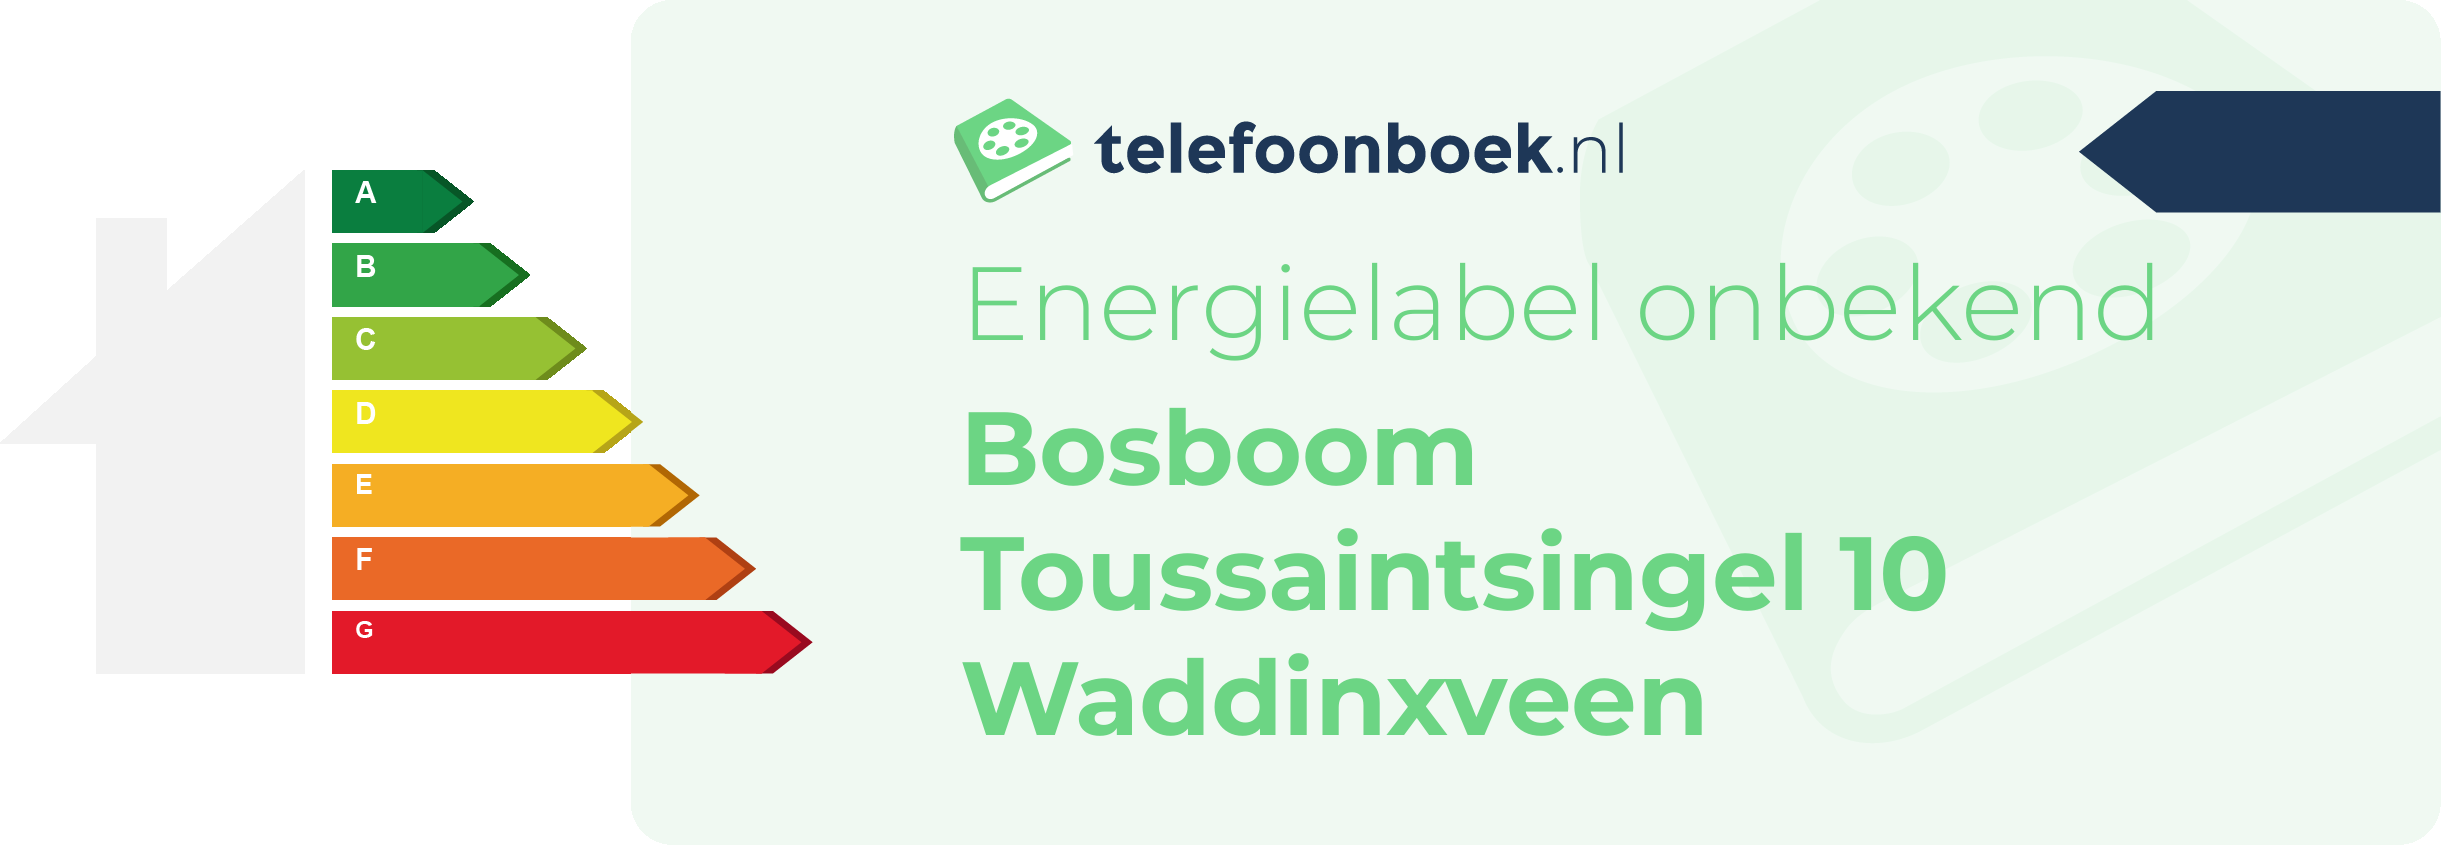 Energielabel Bosboom Toussaintsingel 10 Waddinxveen